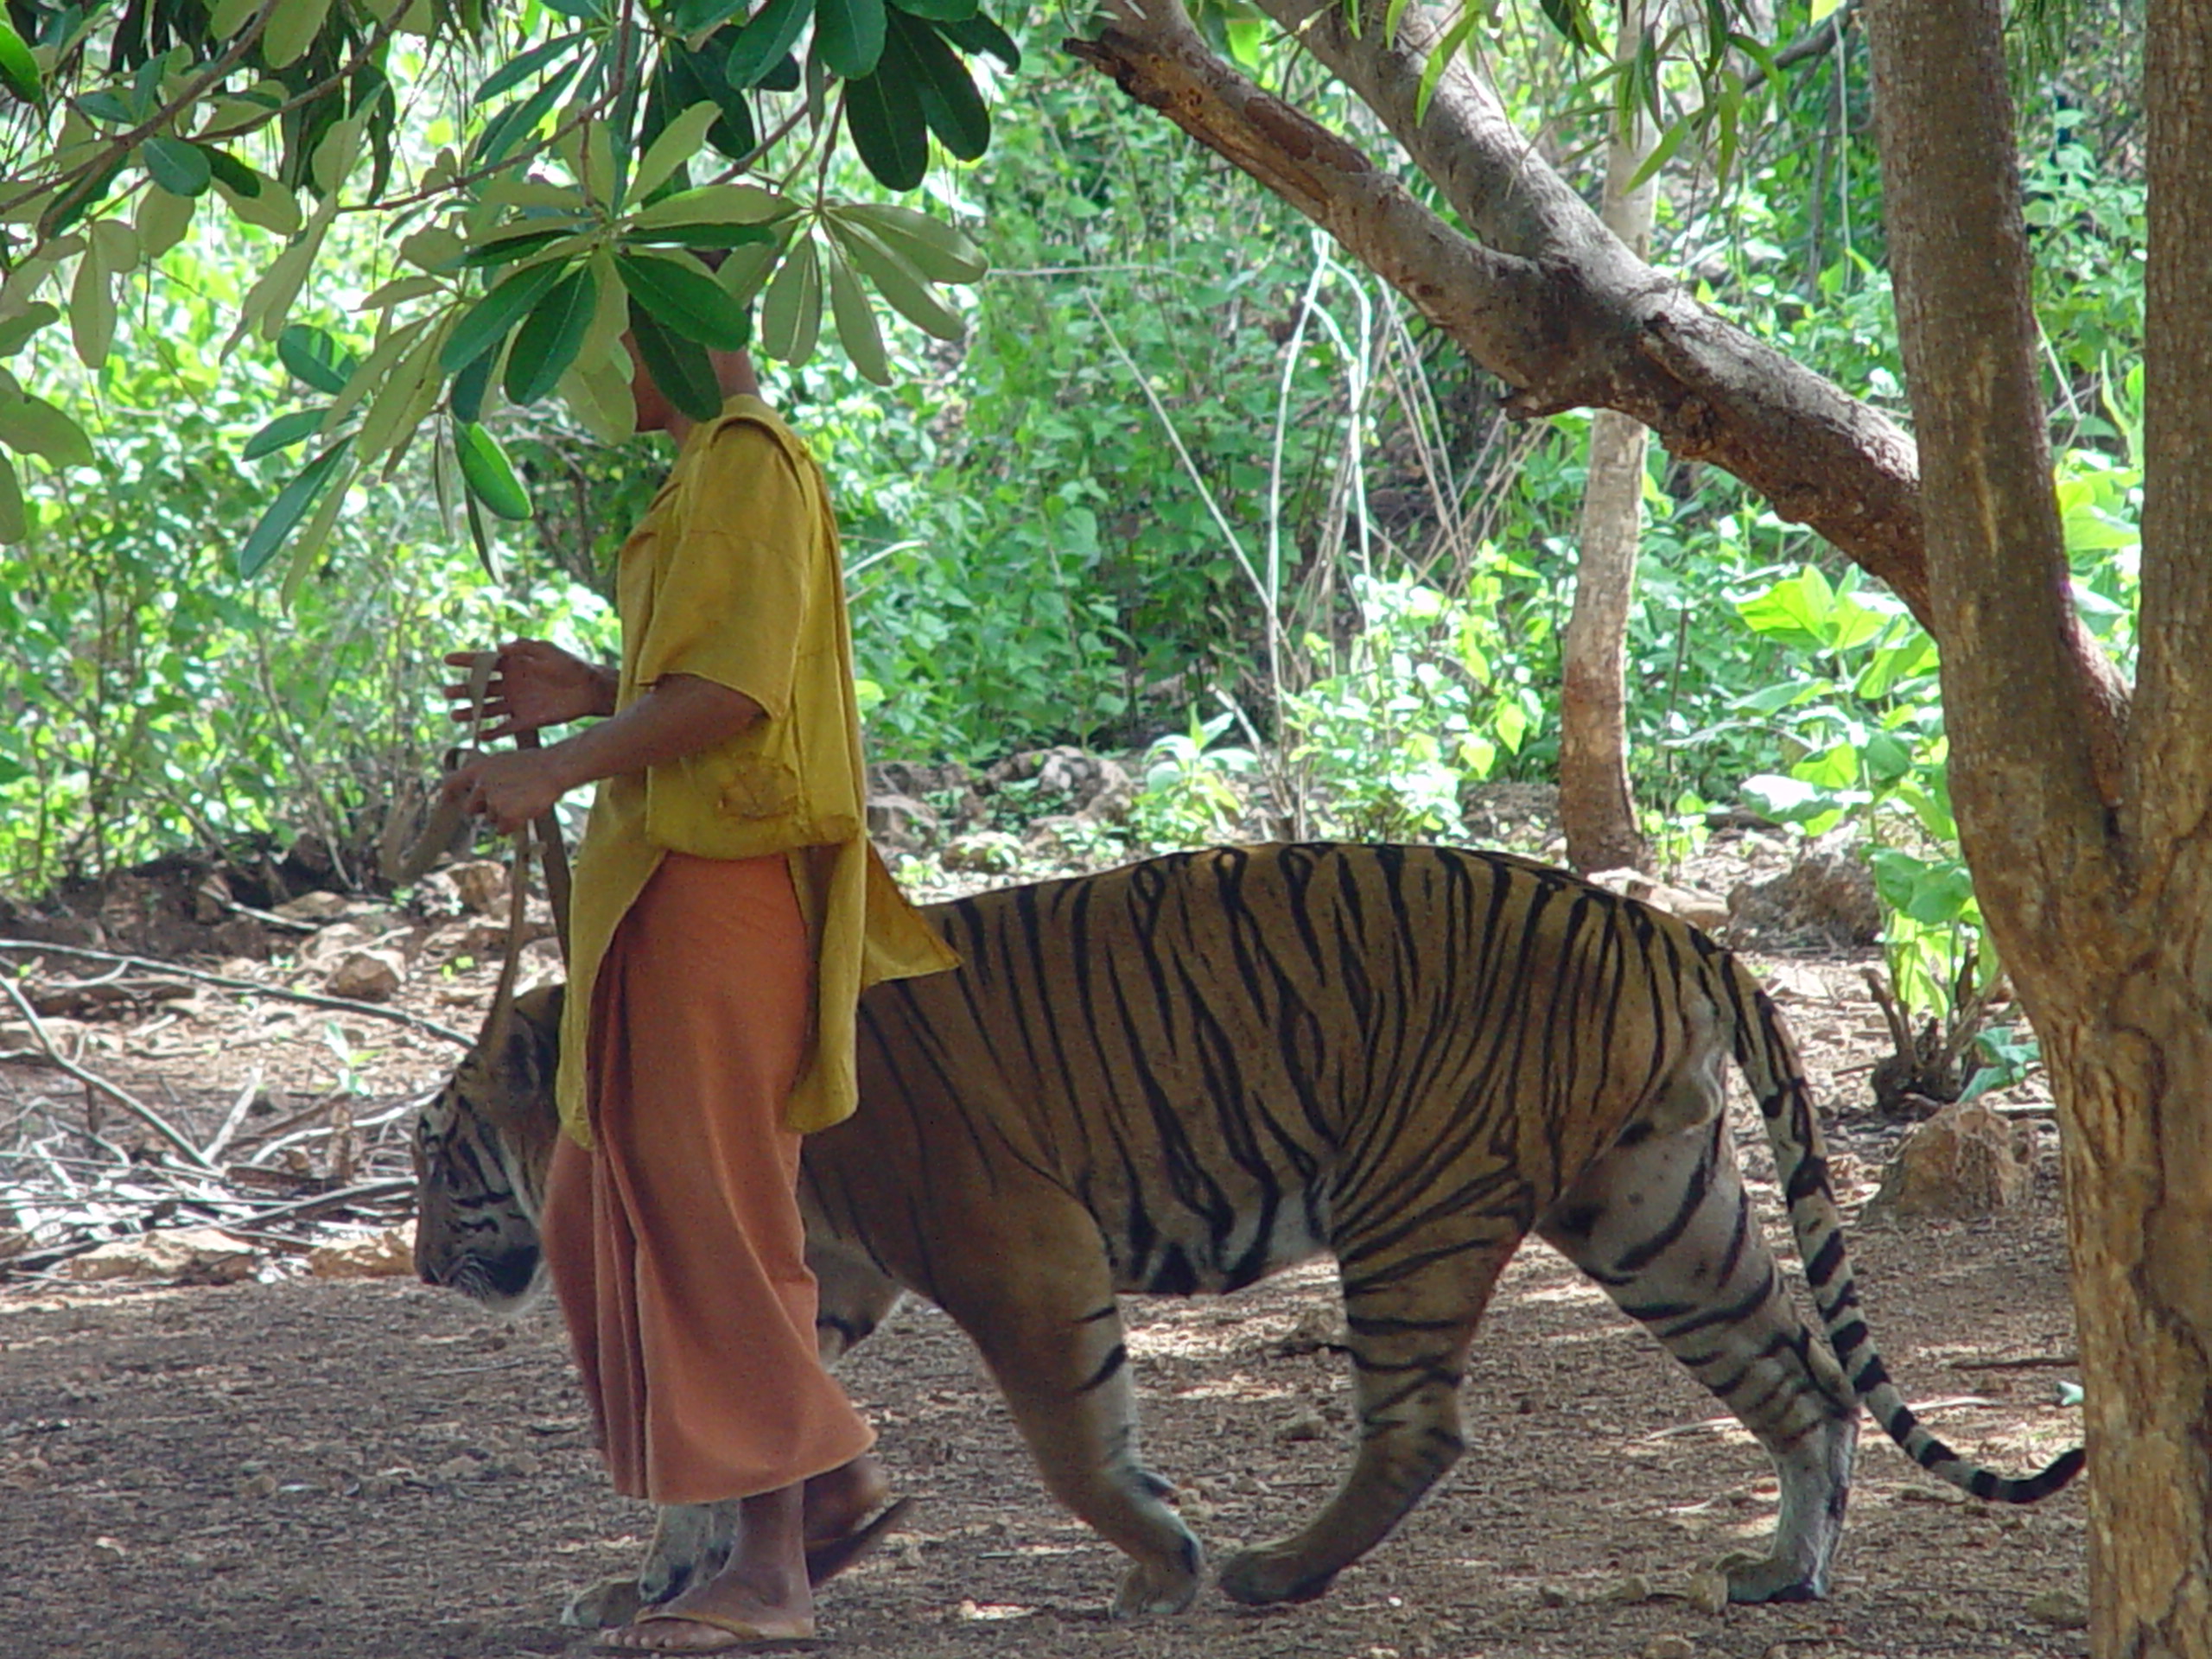 Animal welfare in Thailand - Wikipedia